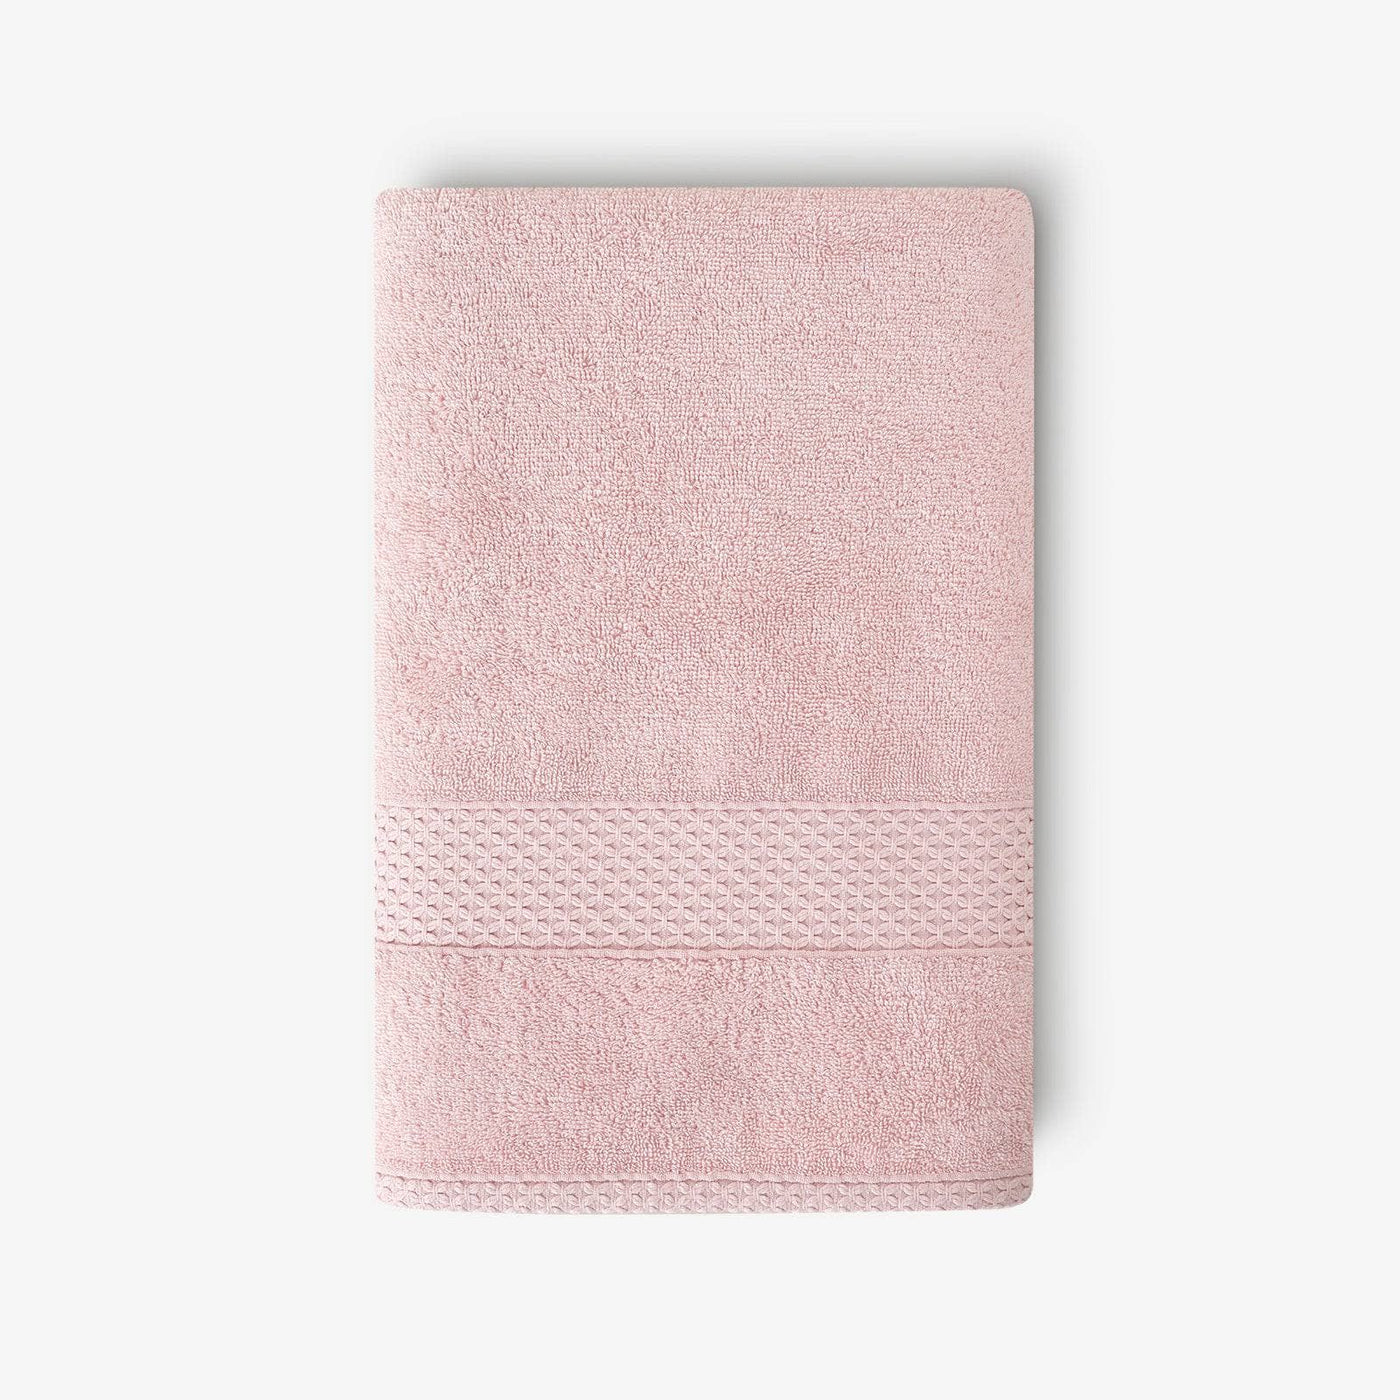 Aqua Fibro Extra Soft 100% Turkish Cotton Bath Towel, Pink Bath Towels sazy.com